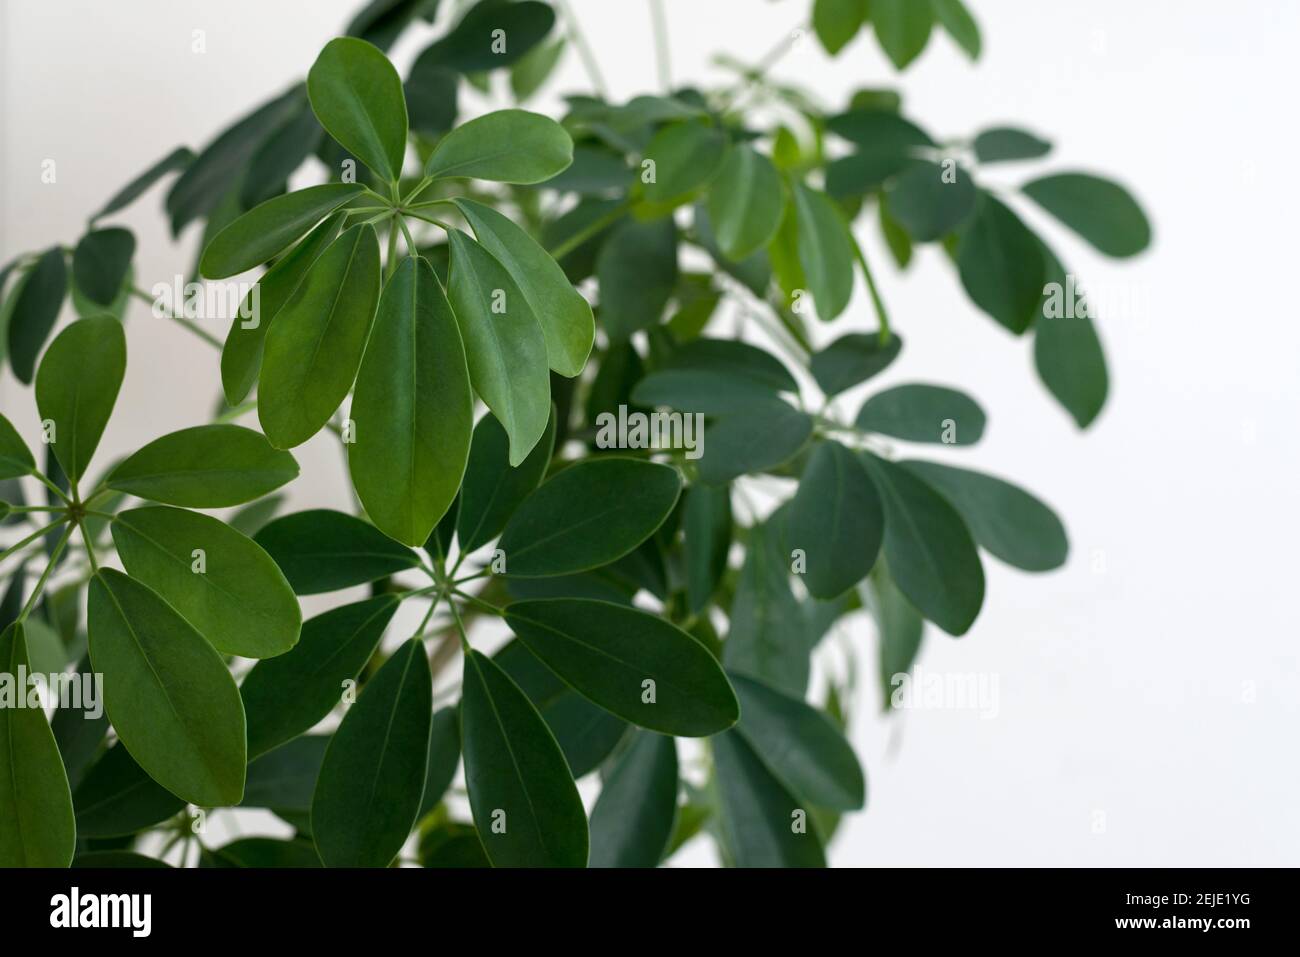 Schefflera arboricola leaves close up also known as umbrella tree plant. Green foliage background. Stock Photo